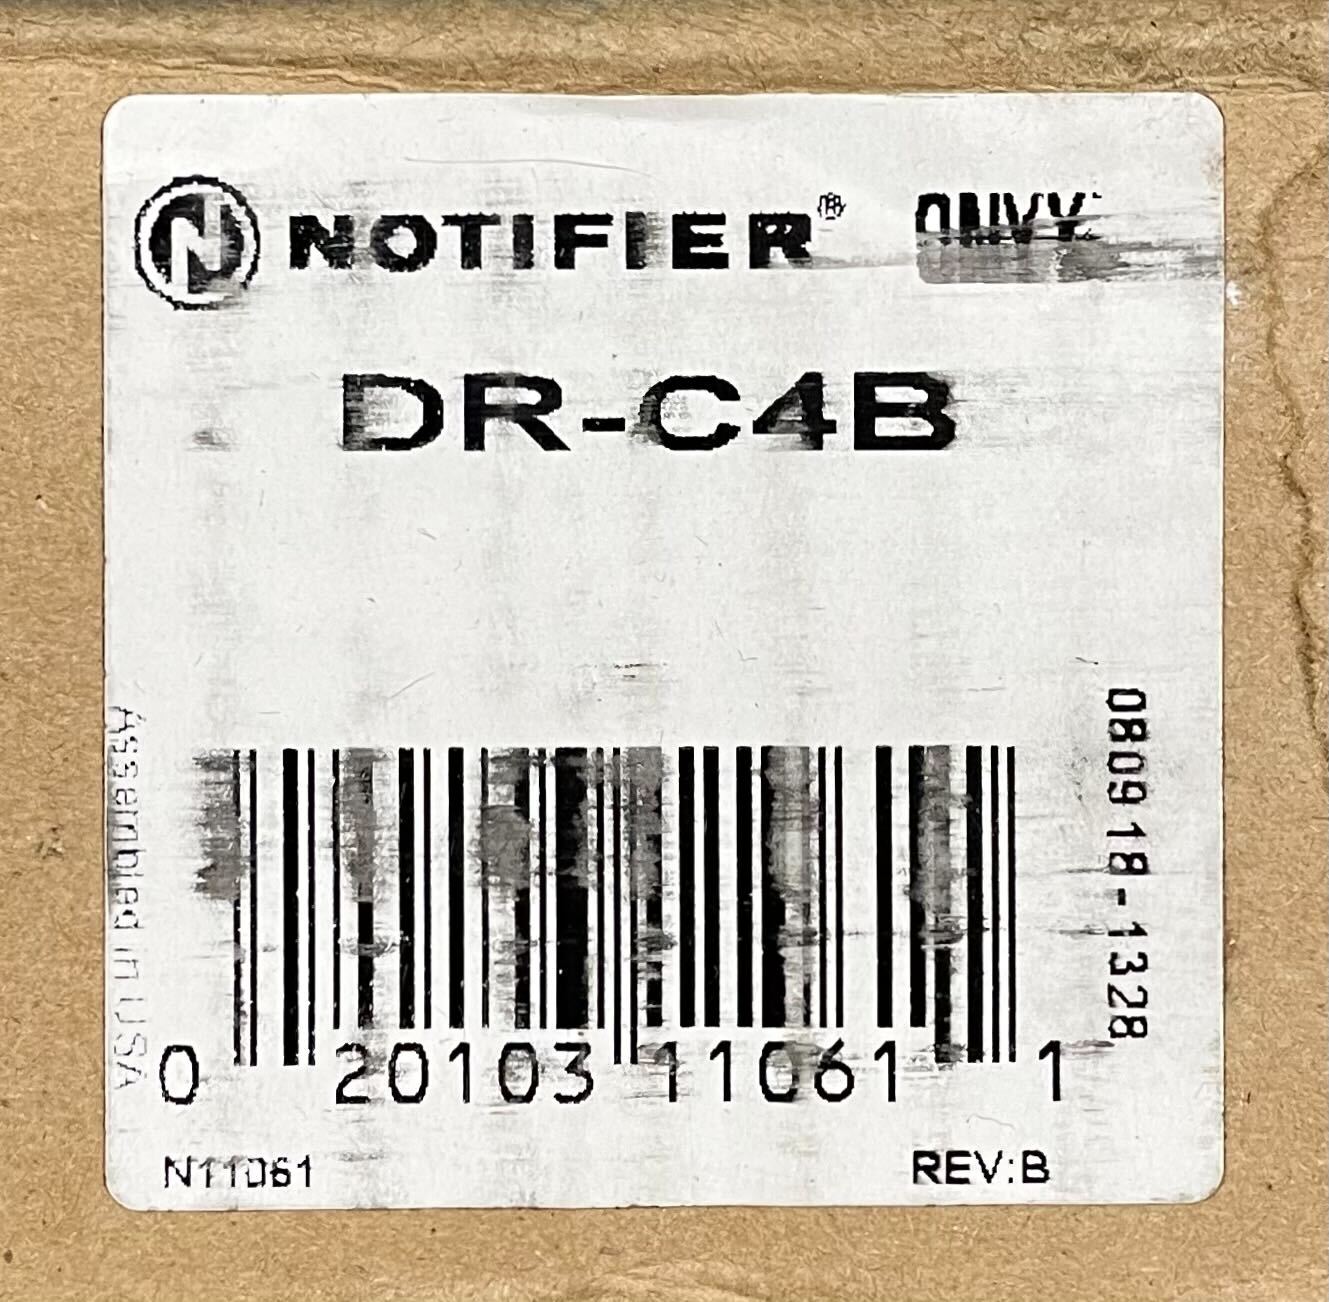 Notifier DR-C4B - The Fire Alarm Supplier